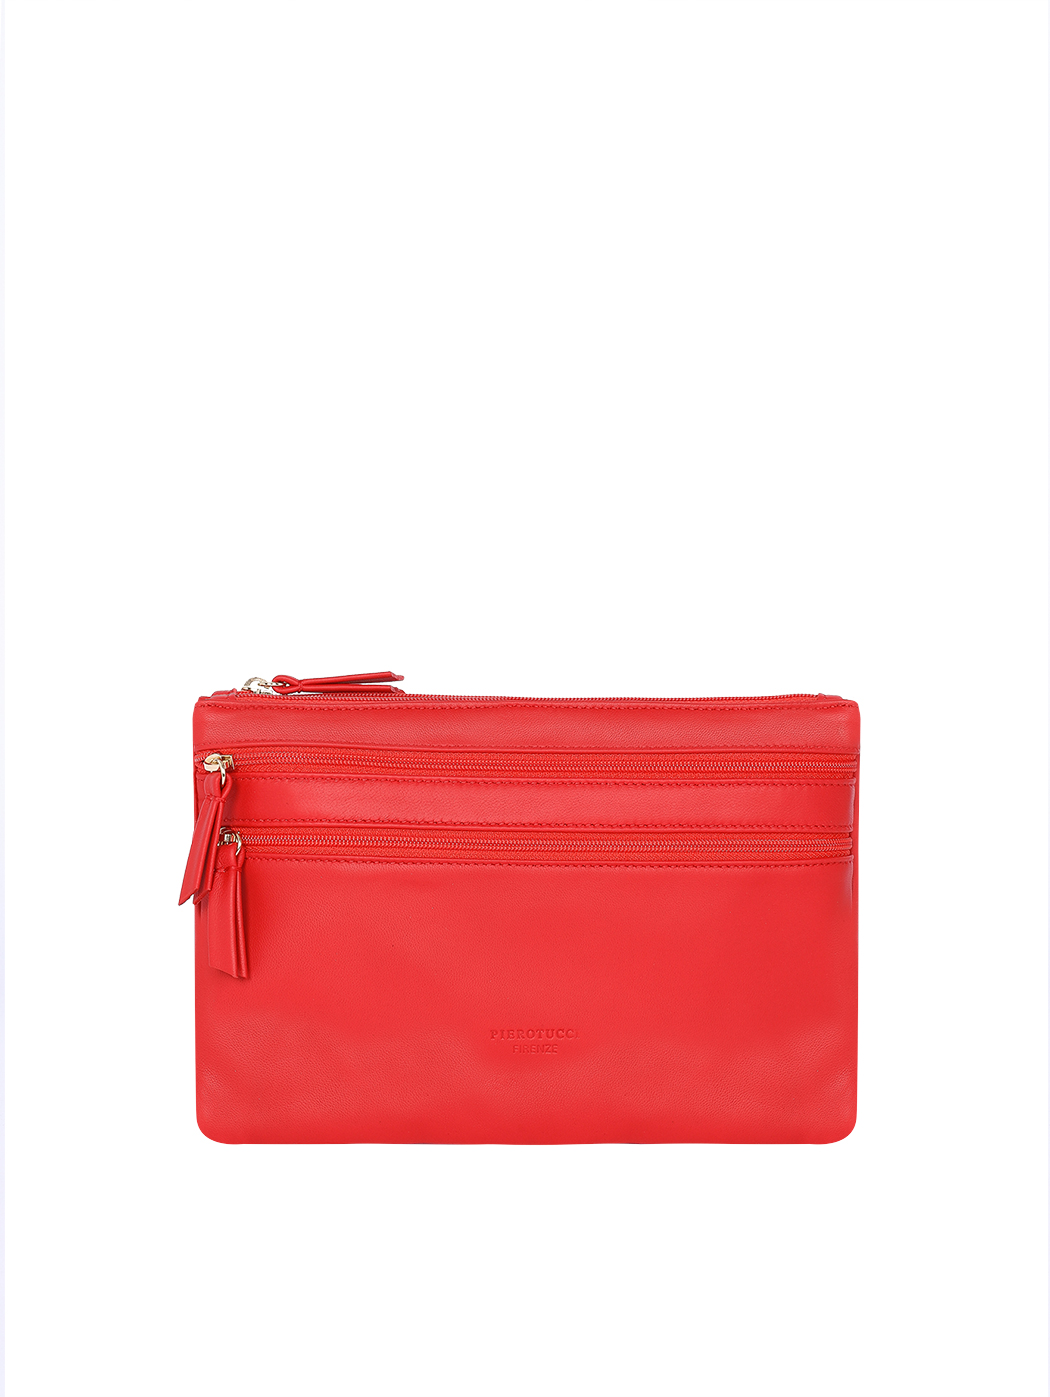 Red Convertible Crossbody Clutch Bag